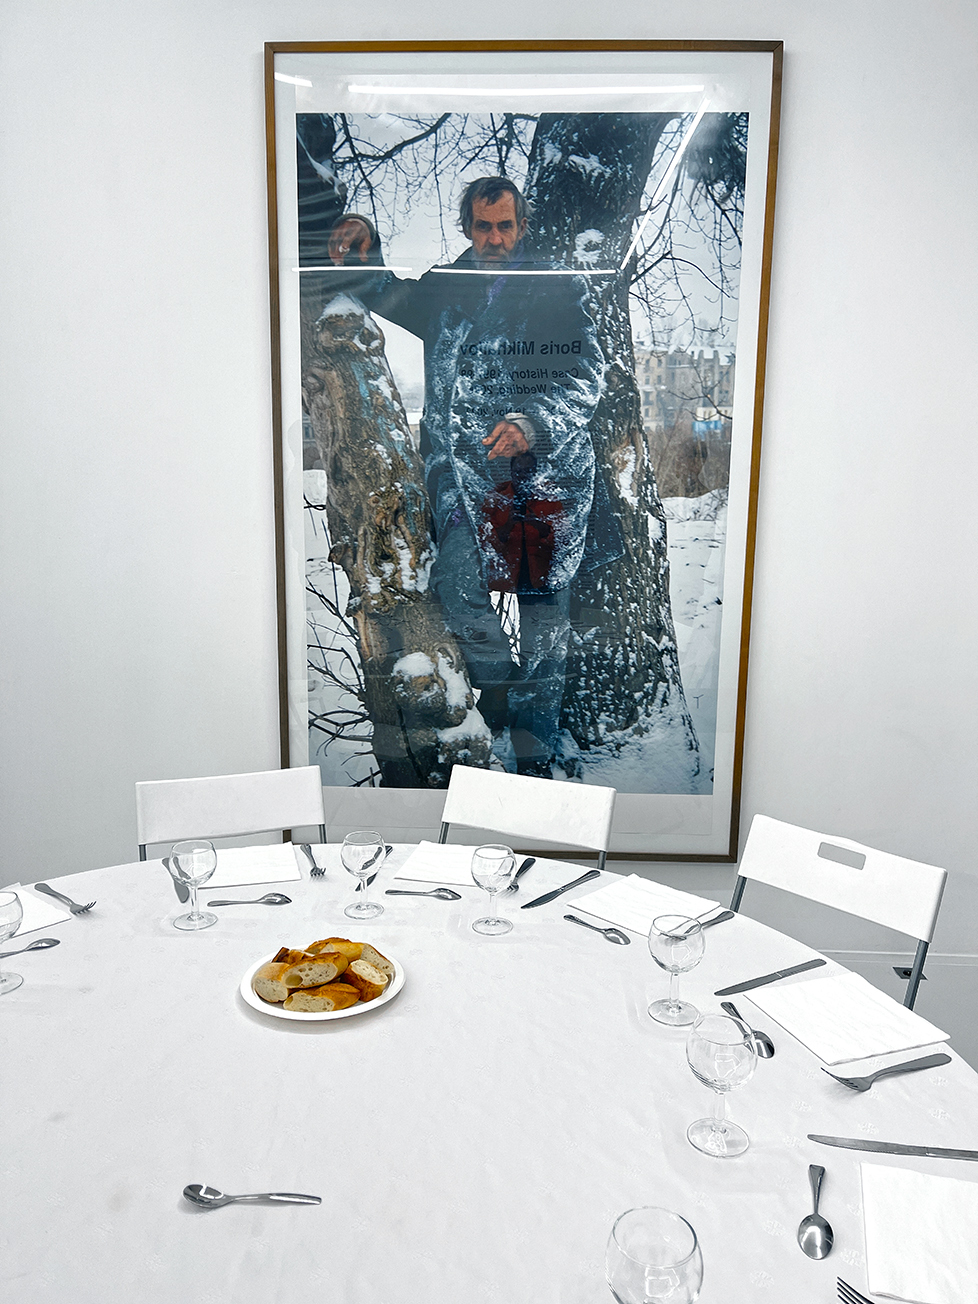 JUERGEN TELLER Boris Mikhailov dinner at Suzanne Tarasieve's, Paris 2022, 2022 Giclee Print 203,2 x 152,4 cm Ed. 1/3 Courtesy Christine König Galerie, Vienna and the artist